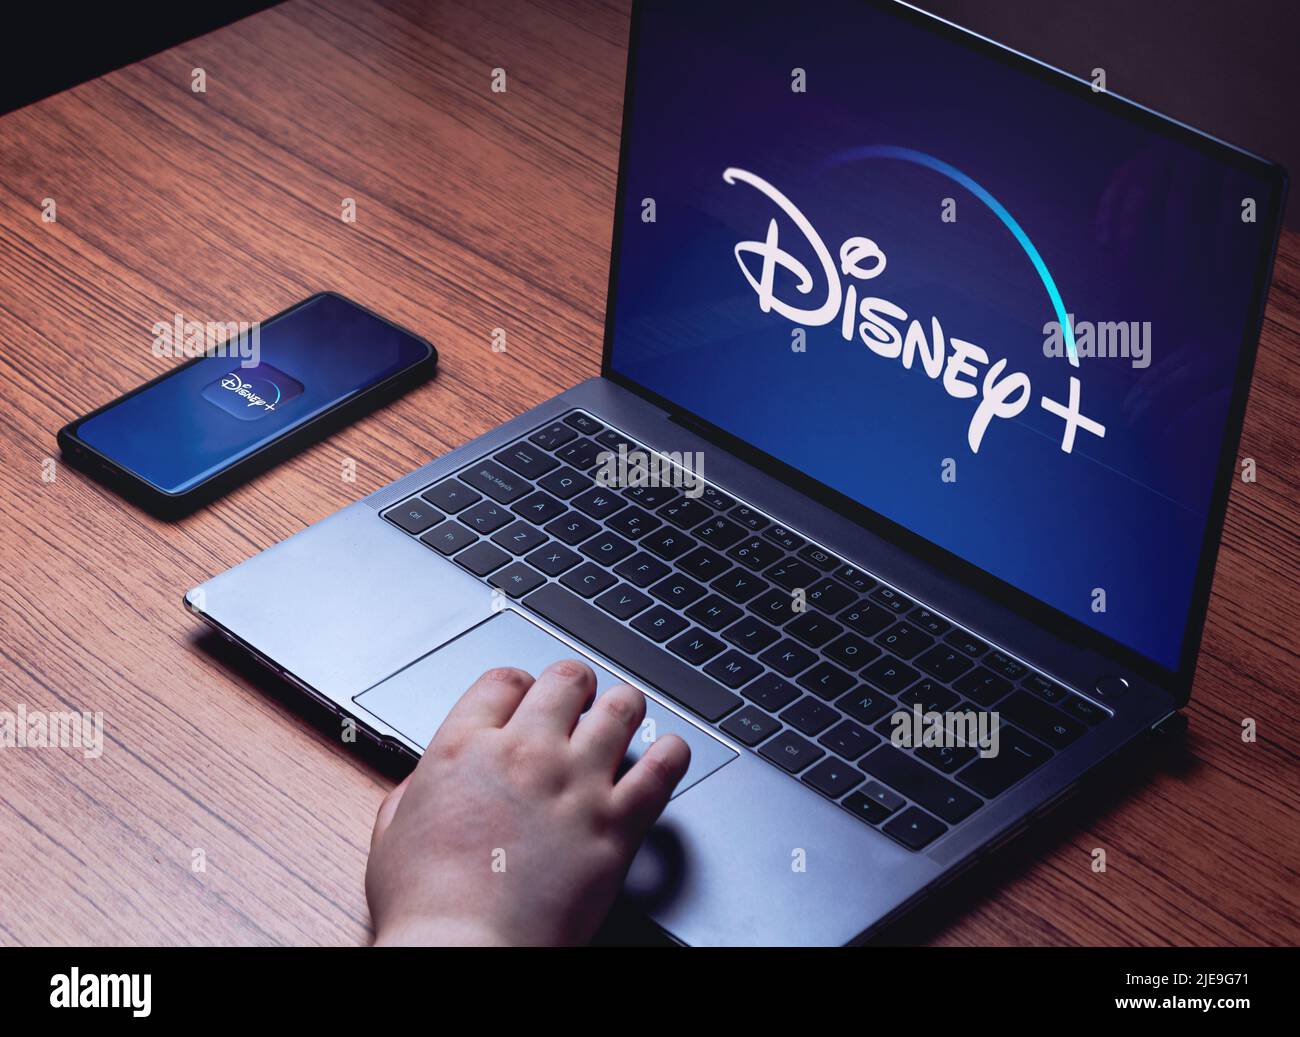 Disney+ logo on laptop and smartphone screens. Wood desk with laptop and smartphone streaming Disney+. Stock Photo